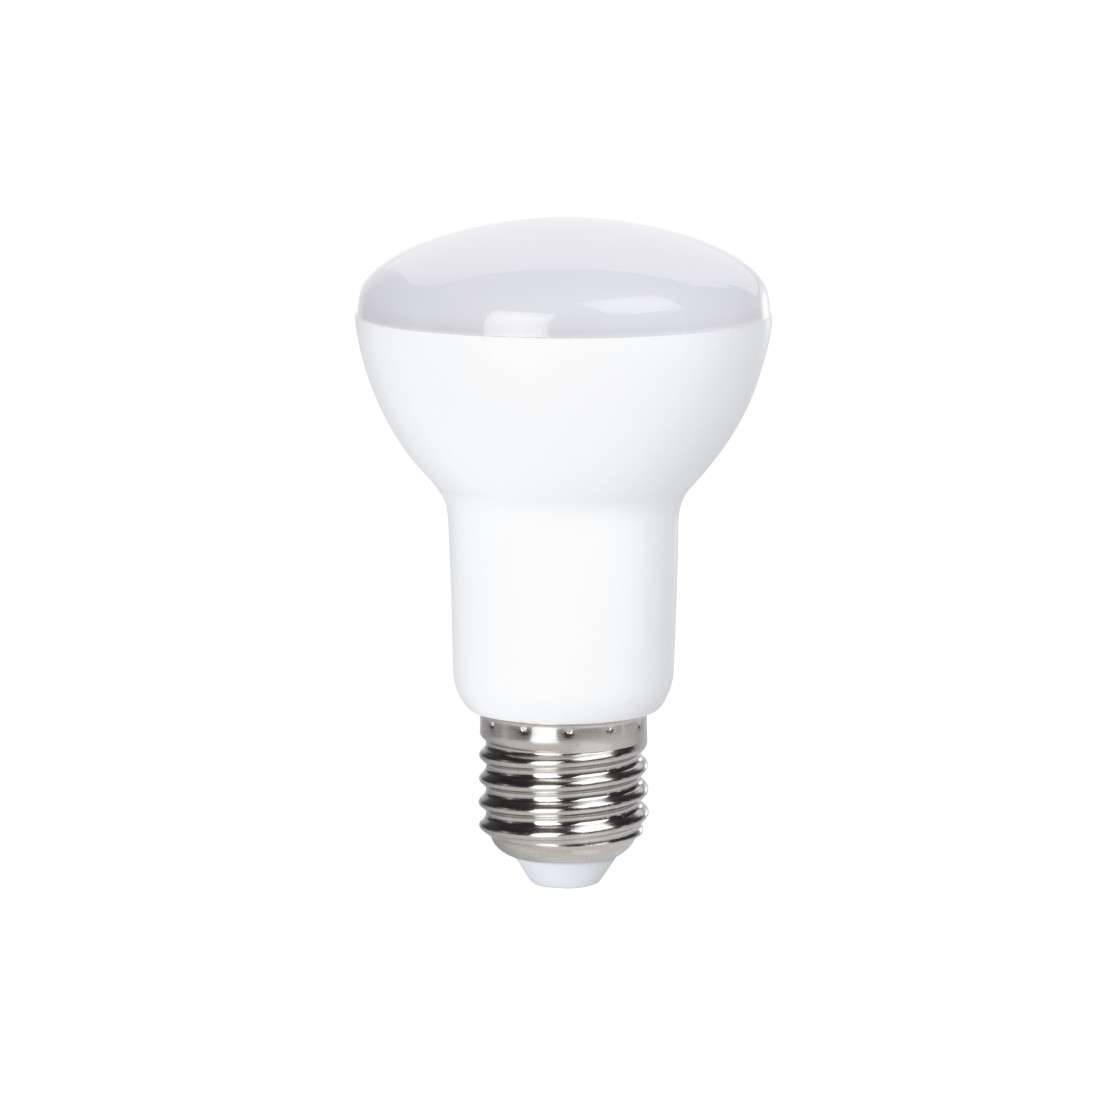 XAVAX LED-Lampe, E27, 806lm ersetzt 60W, Reflektorlampe R63, Warmweiß